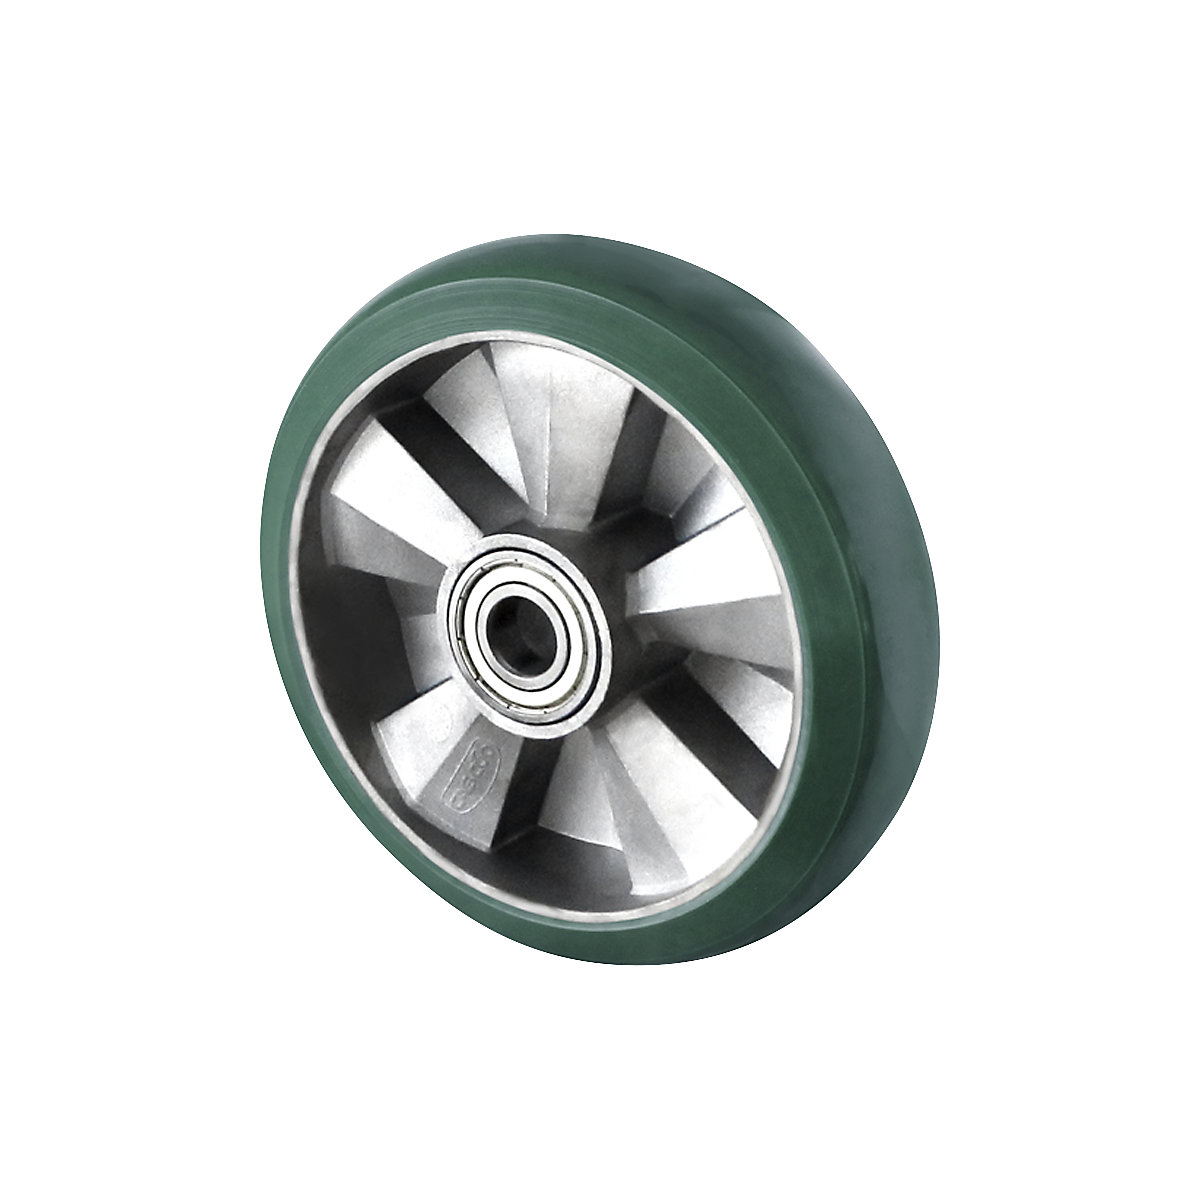 EUROKRAFTbasic – PU elastic wheel, green